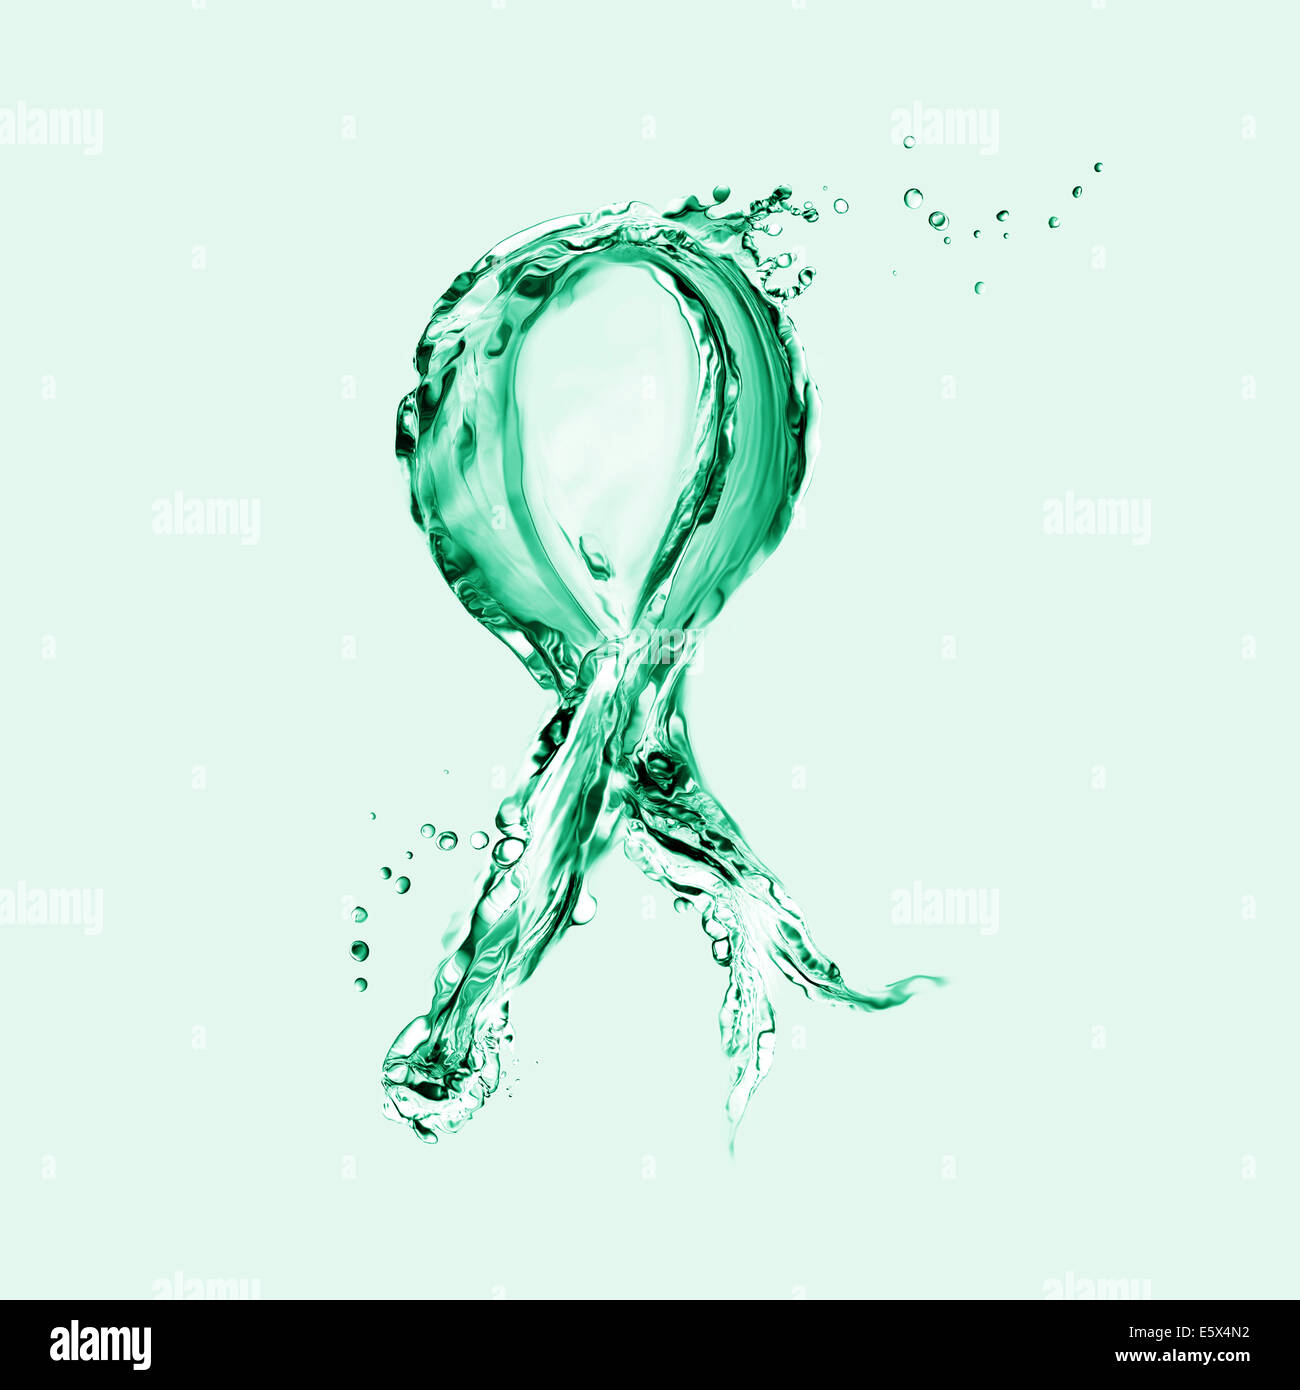 Green Ribbon for organ donation awareness, environment protection, mental health awareness, etc. Stock Photo